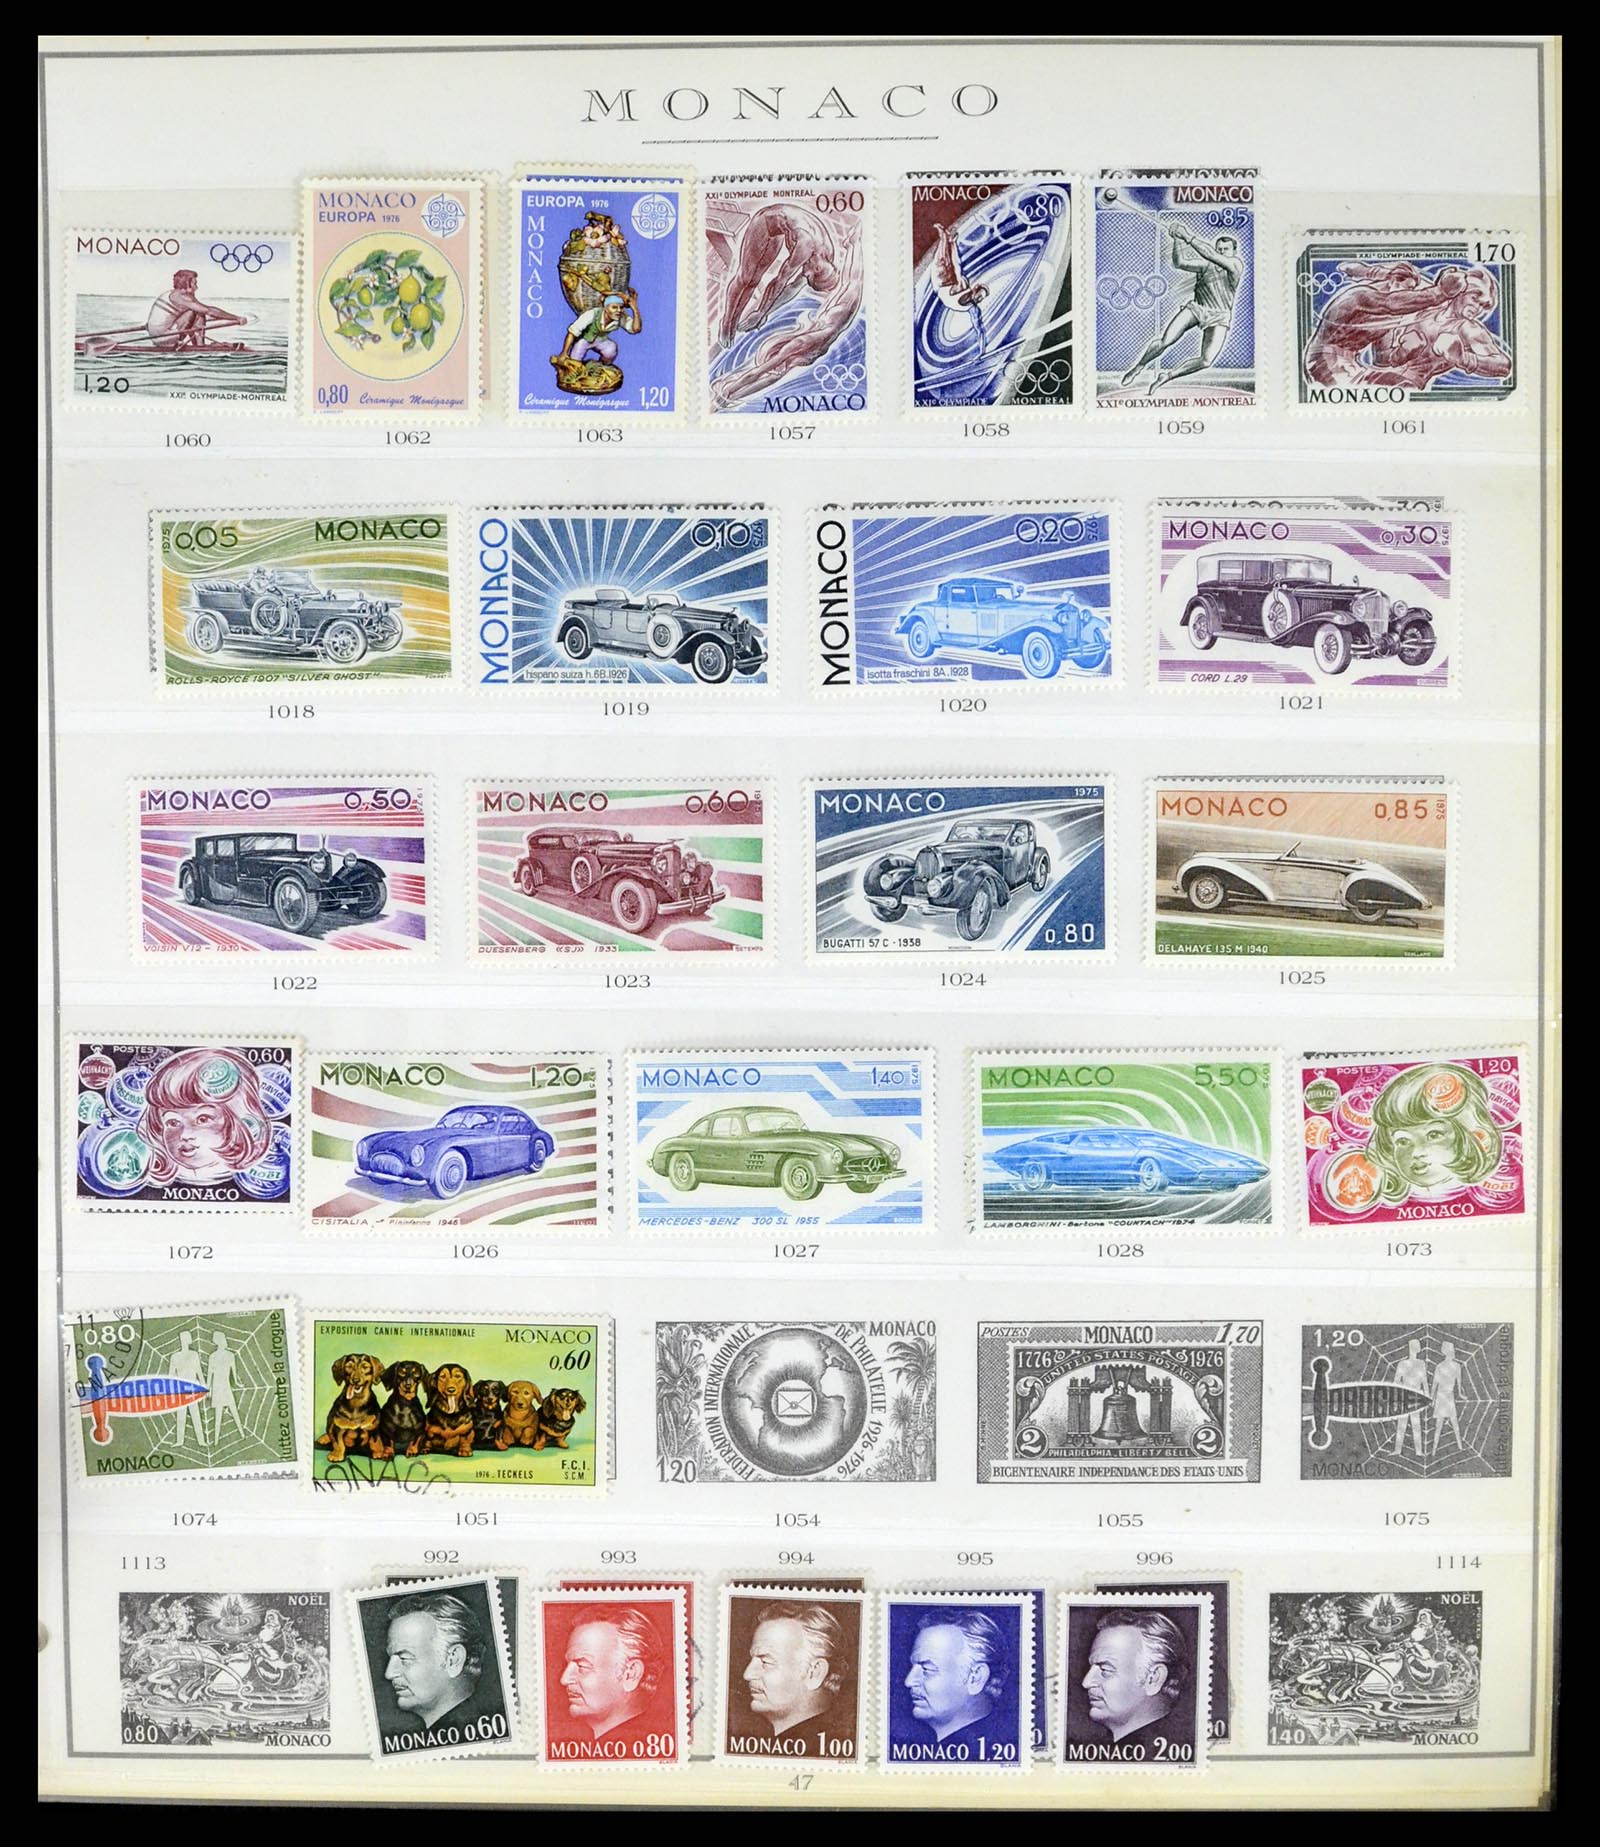 37437 091 - Stamp collection 37437 Monaco 1885-1996.